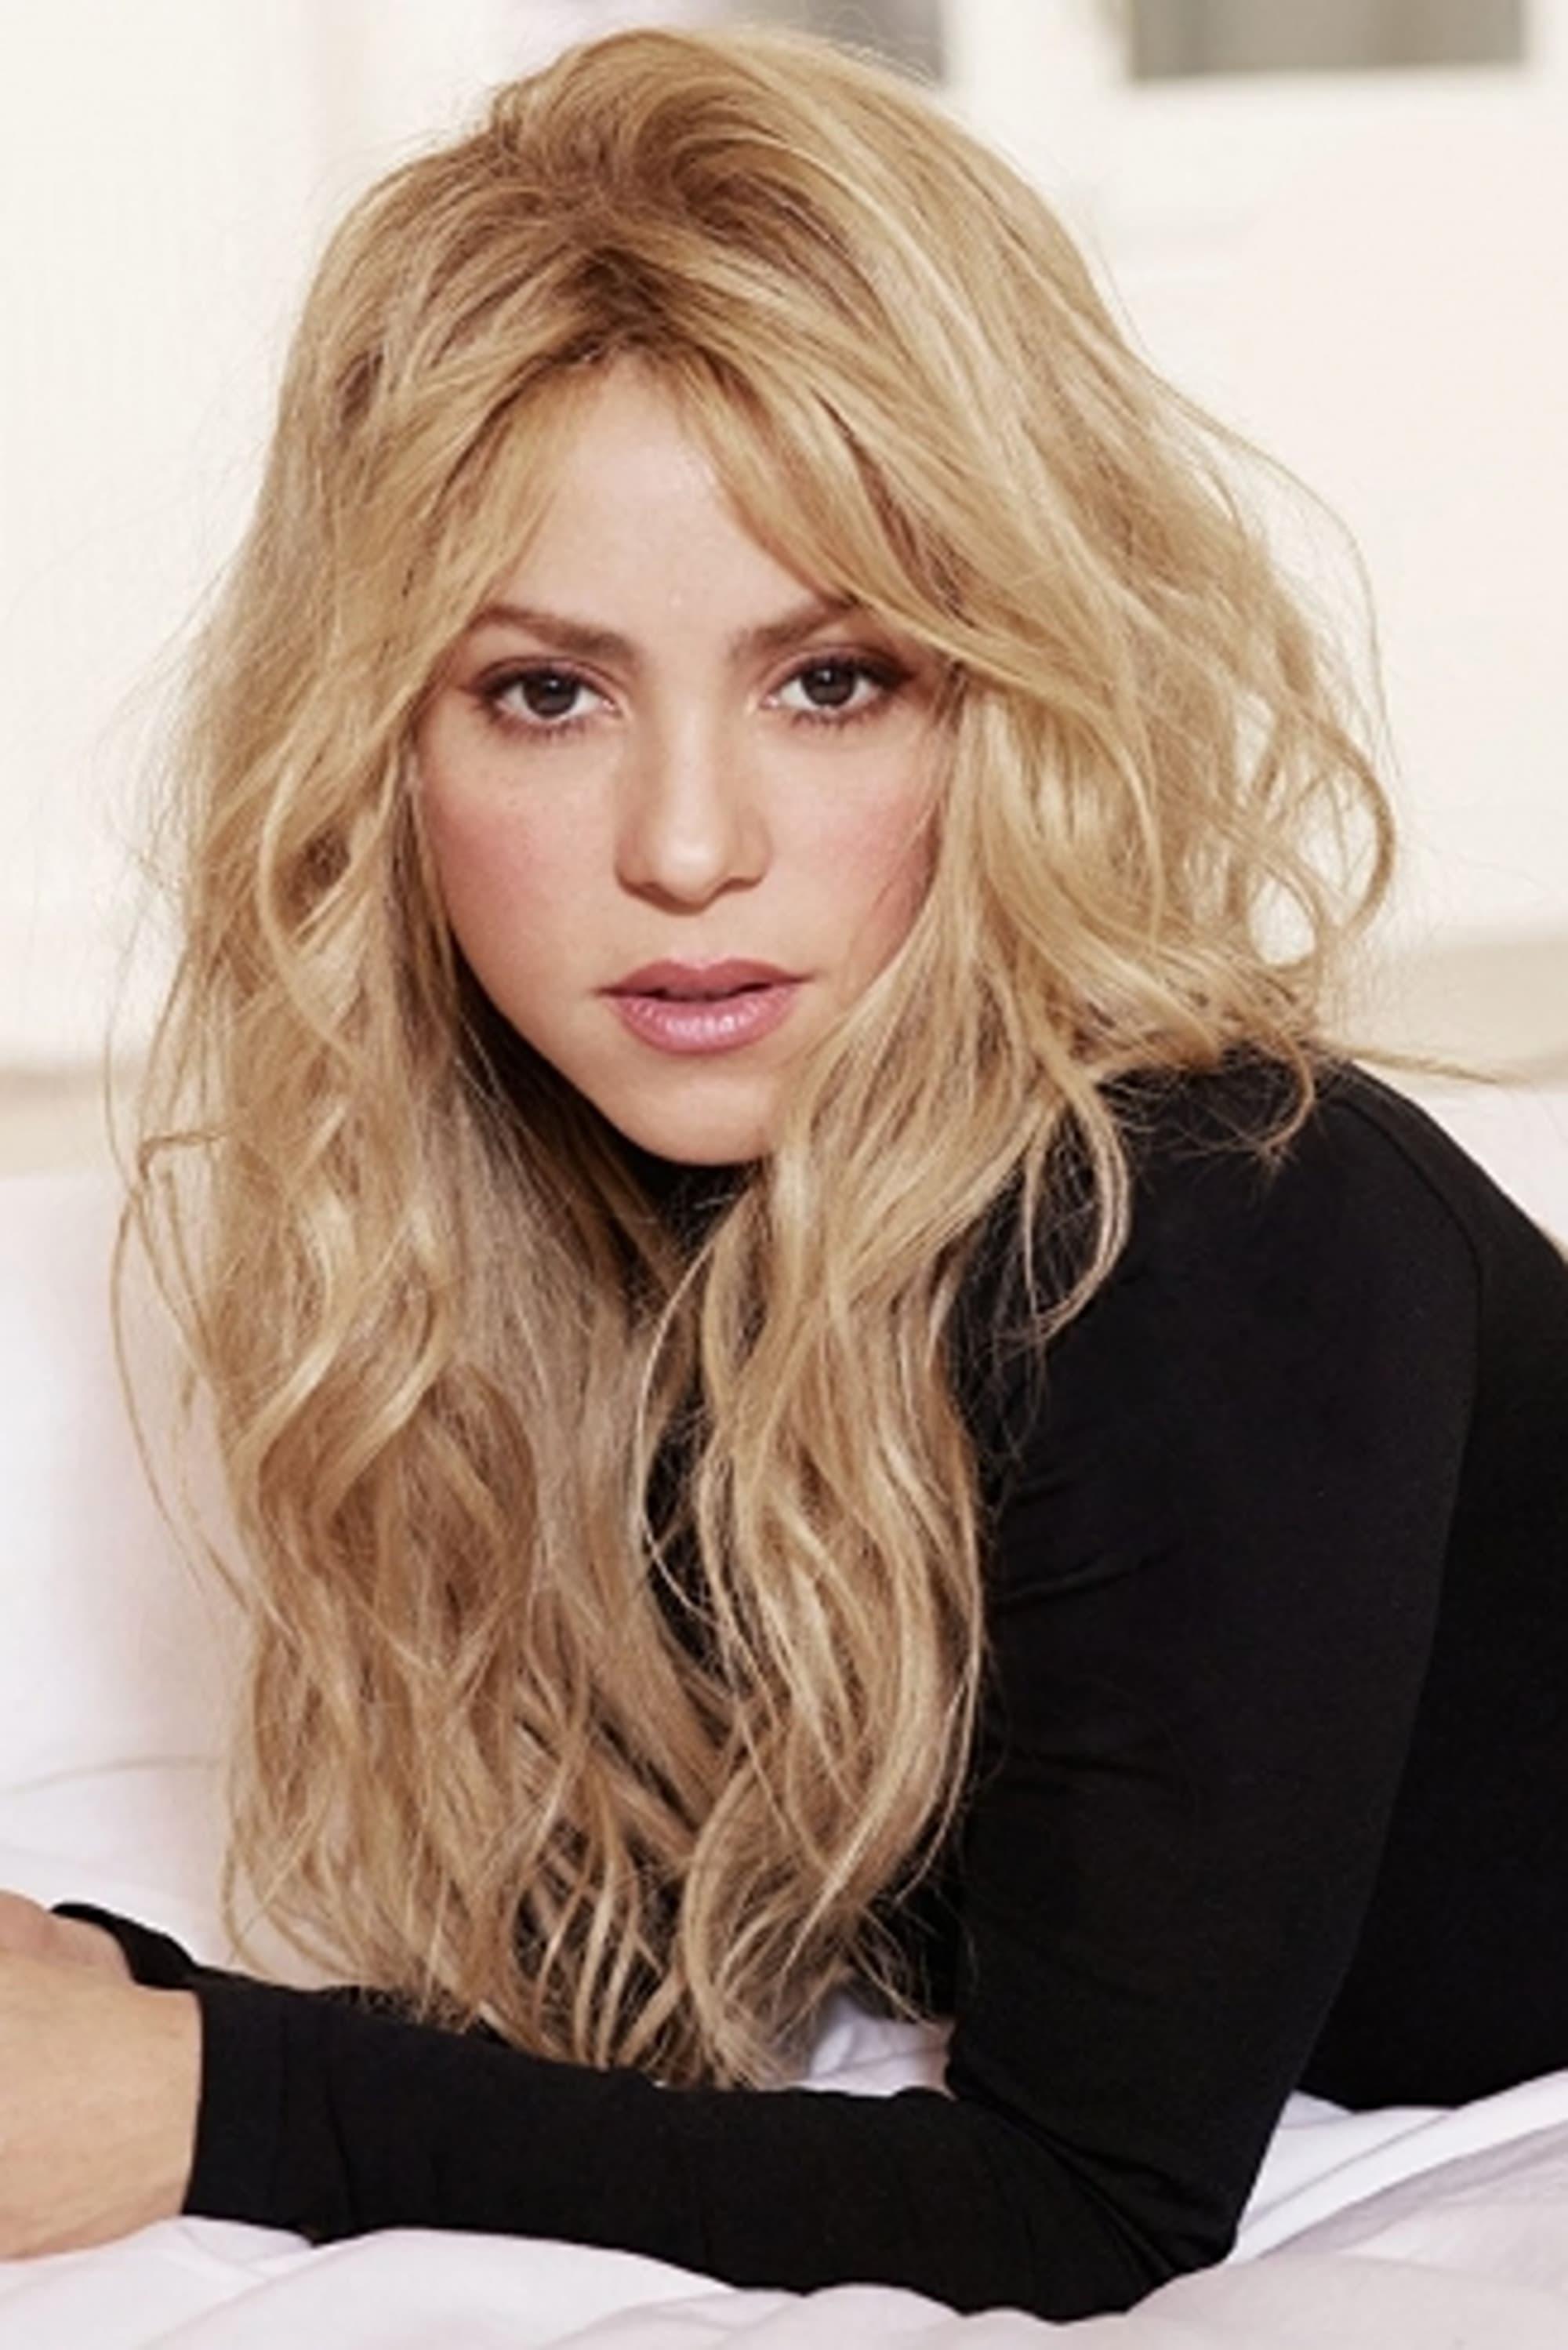 Shakira poster